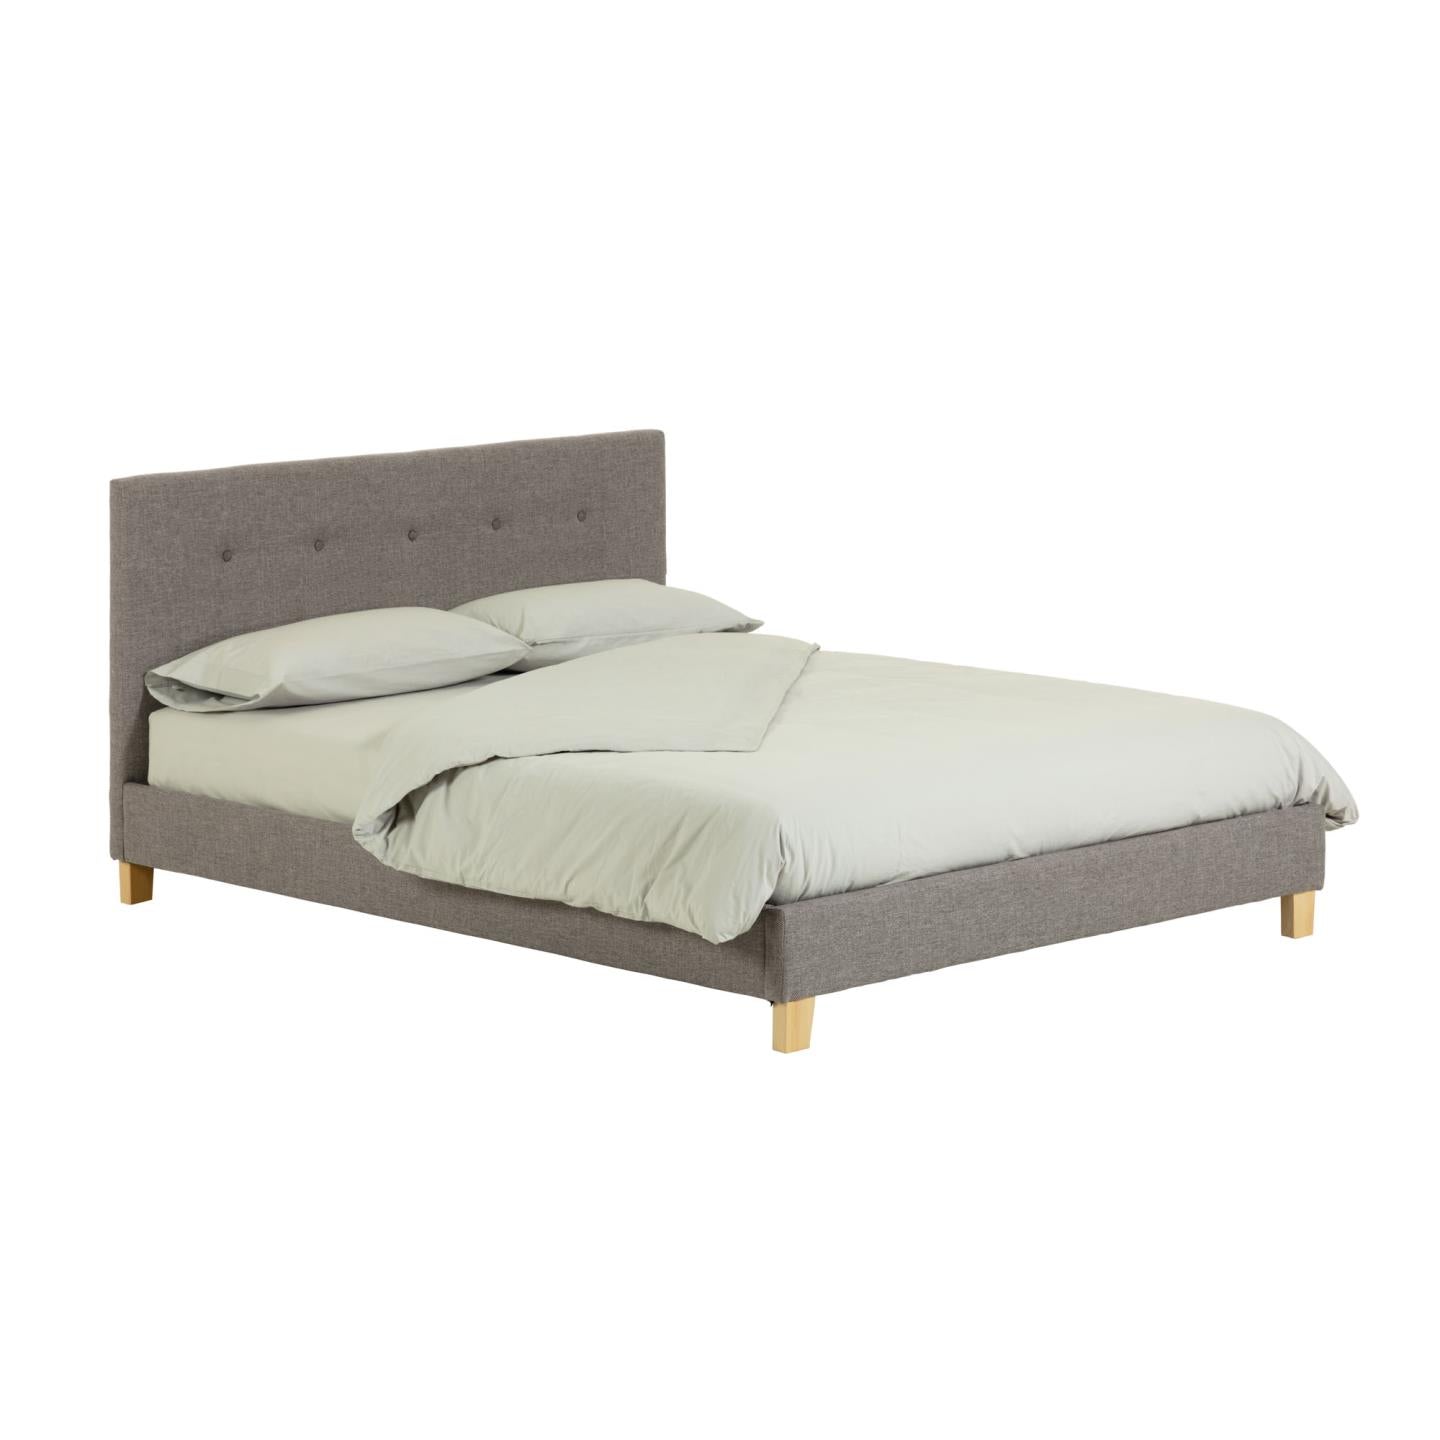 Natuse ágy 150 x 190 cm-es matracalapra való matraccal